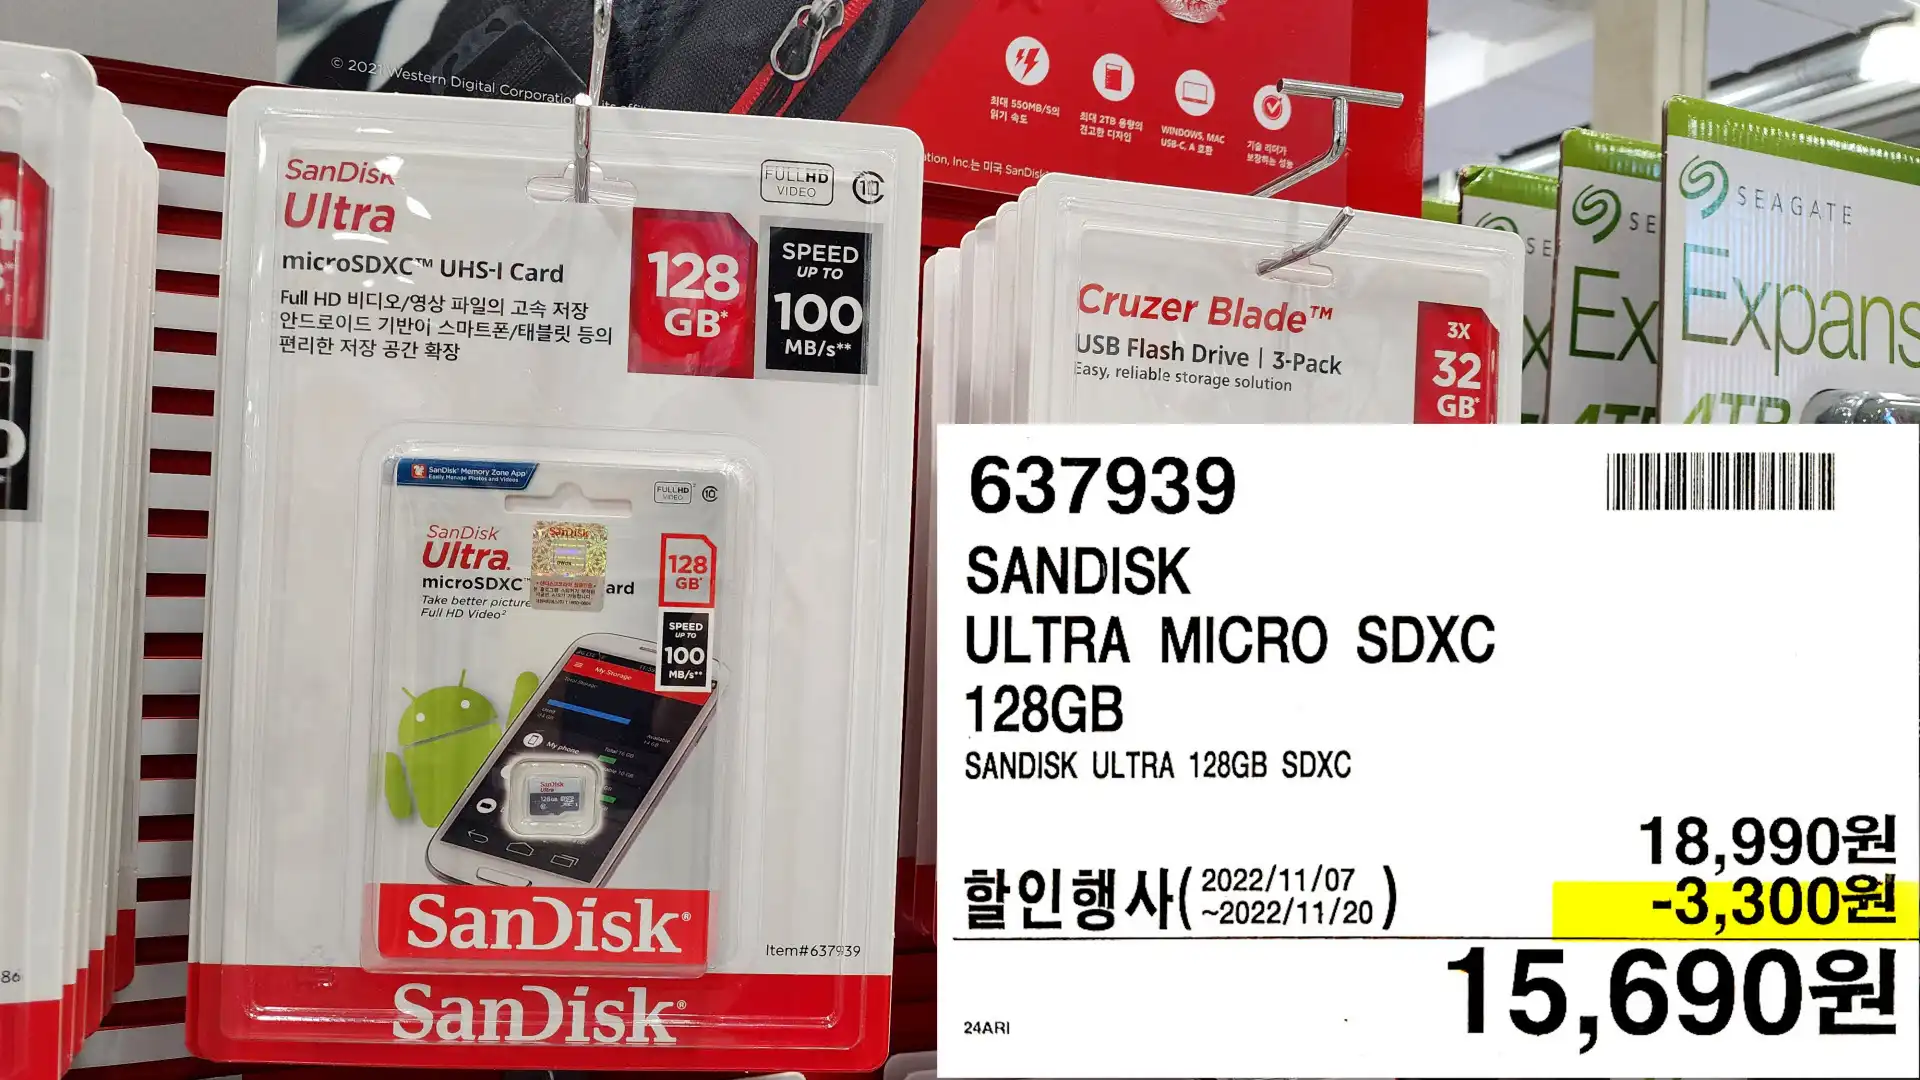 SANDISK
ULTRA MICRO SDXC
128GB
SANDISK ULTRA 128GB SDXC
15&#44;690원